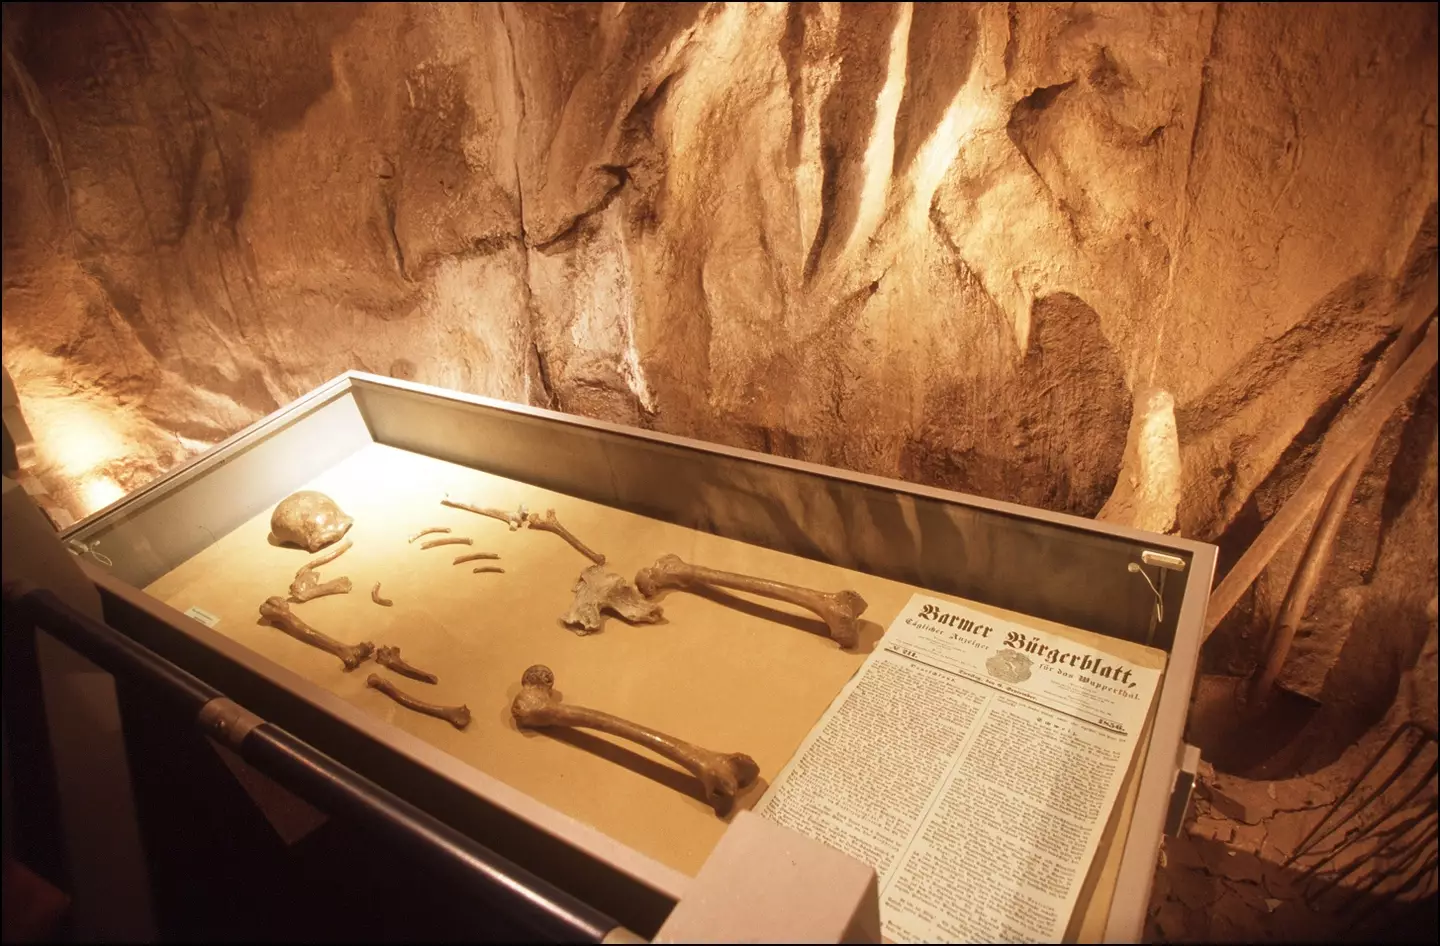 Neanderthal bones were analyzed for the study. (Patrick AVENTURIER/Gamma-Rapho via Getty Images)